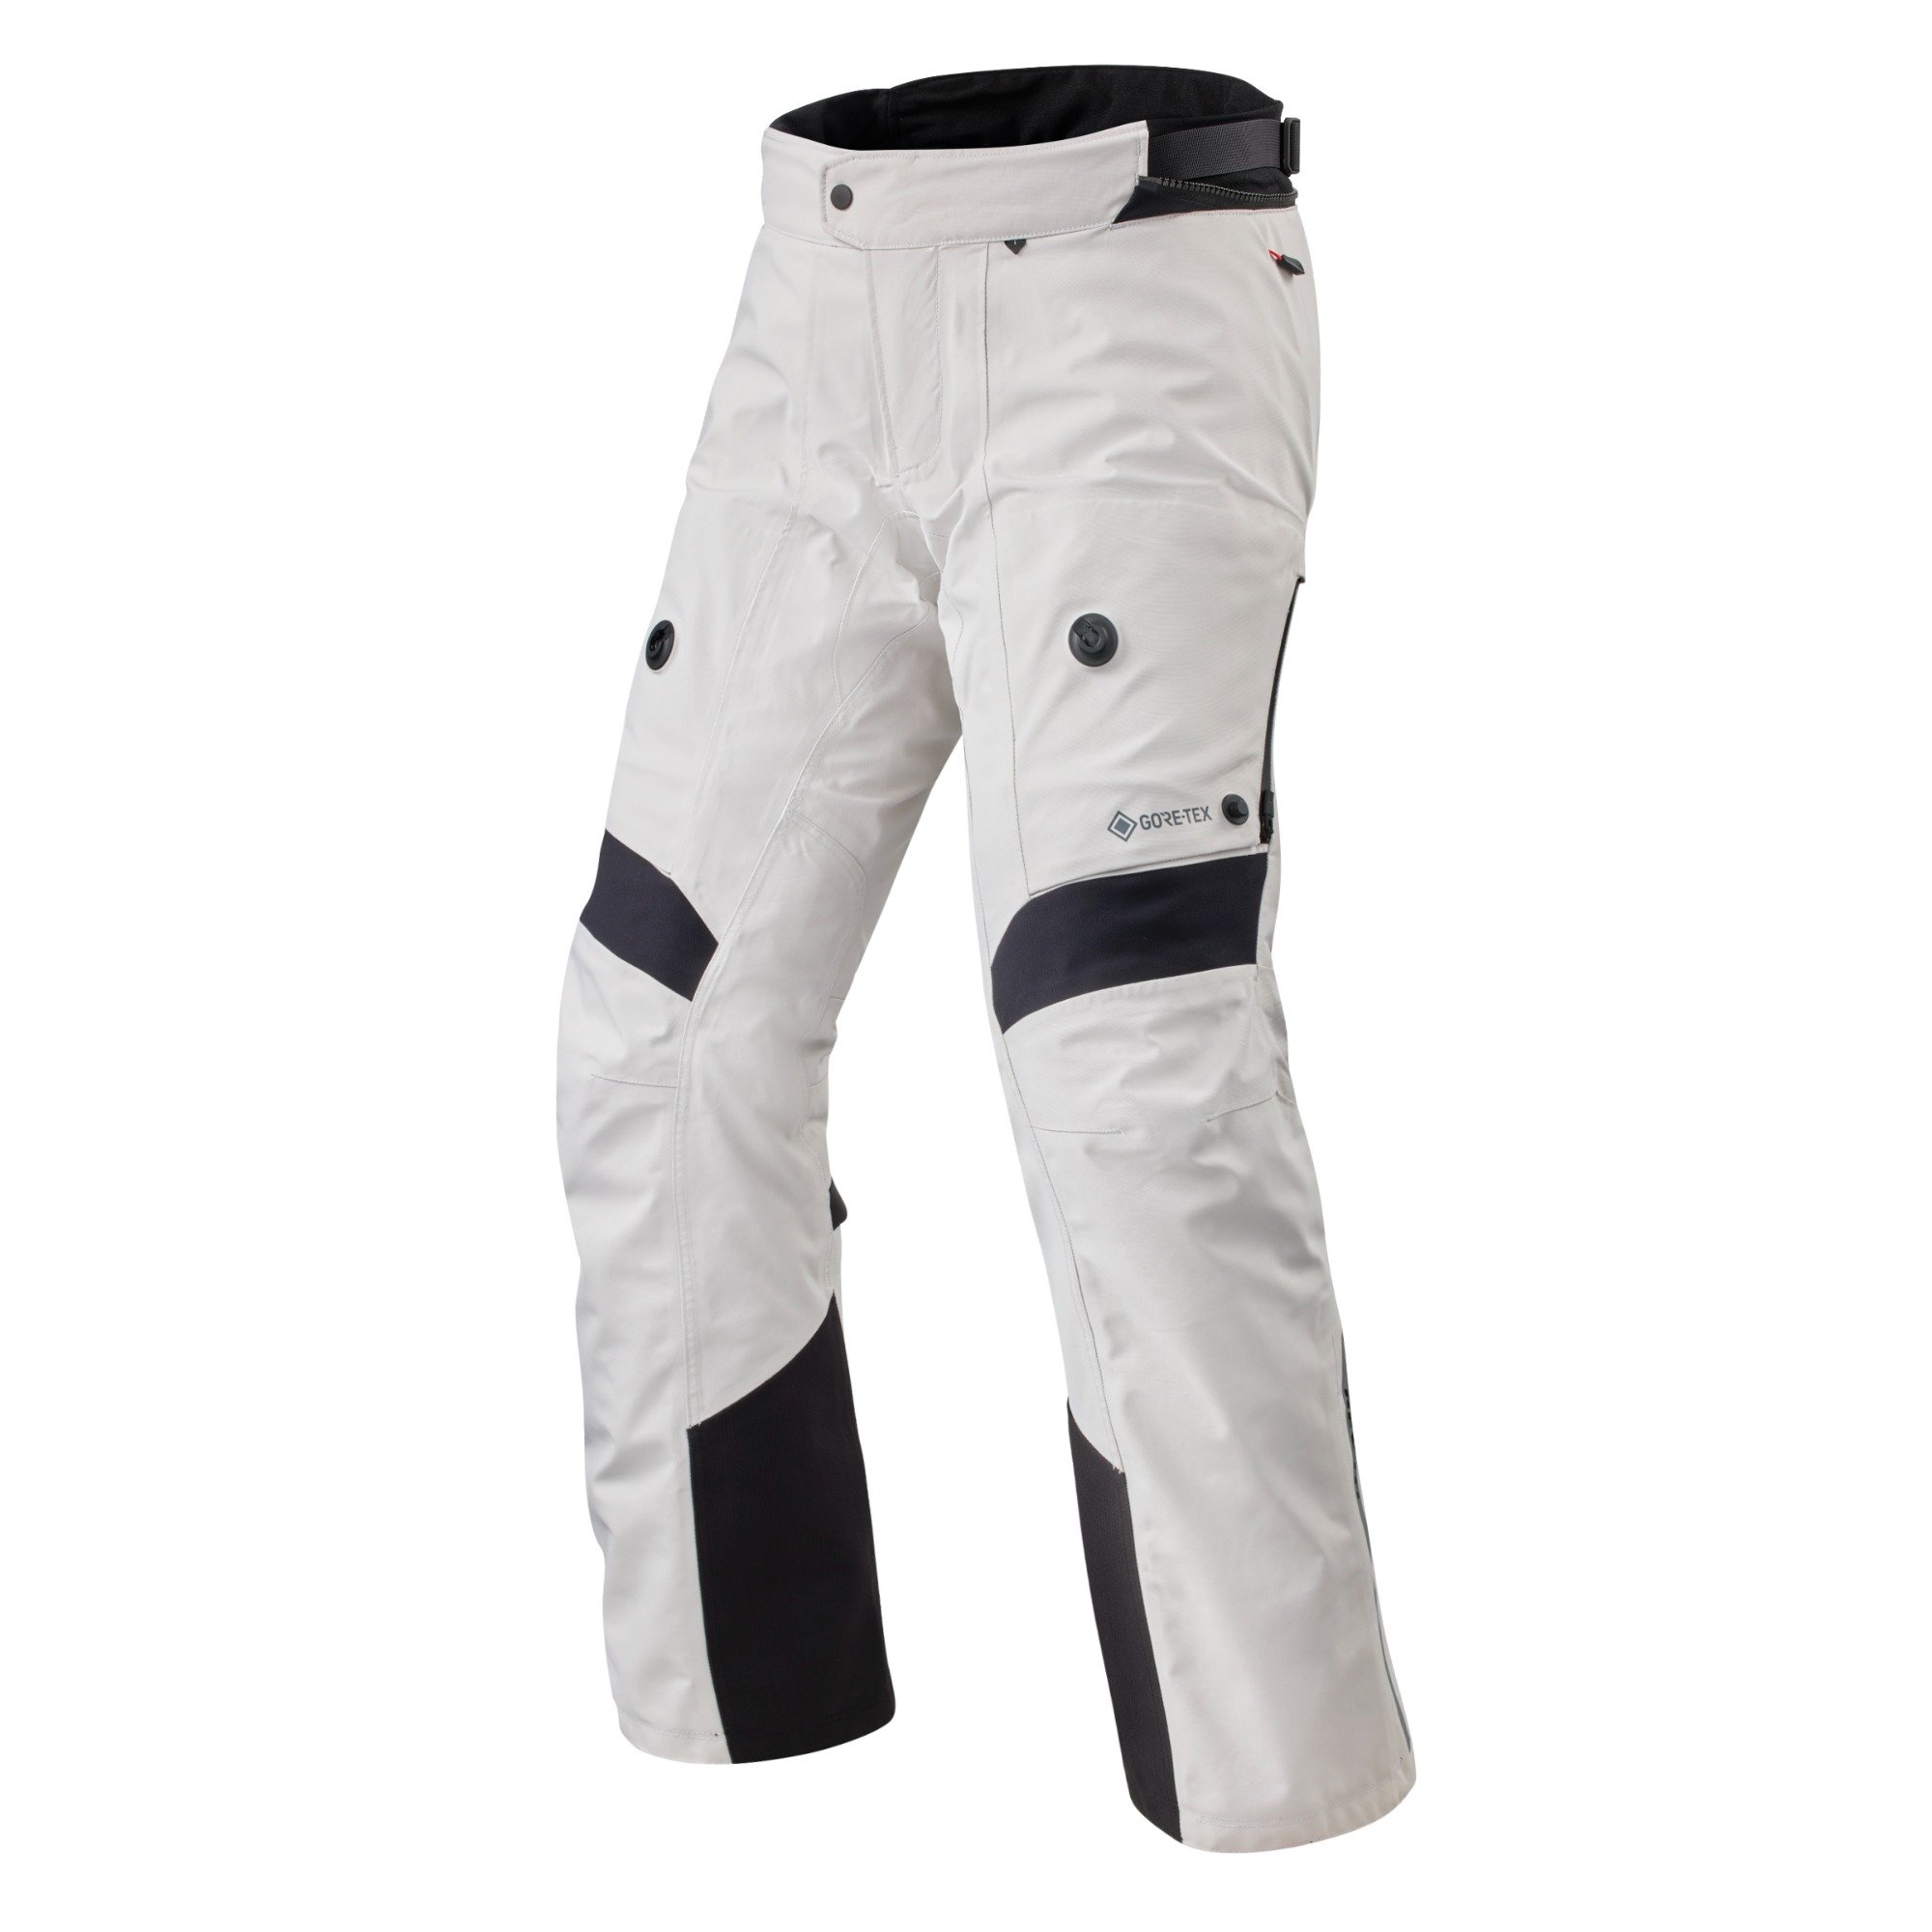 Image of REV'IT! Pants Poseidon 3 GTX Silver Black Short Motorcycle Pants Size M EN